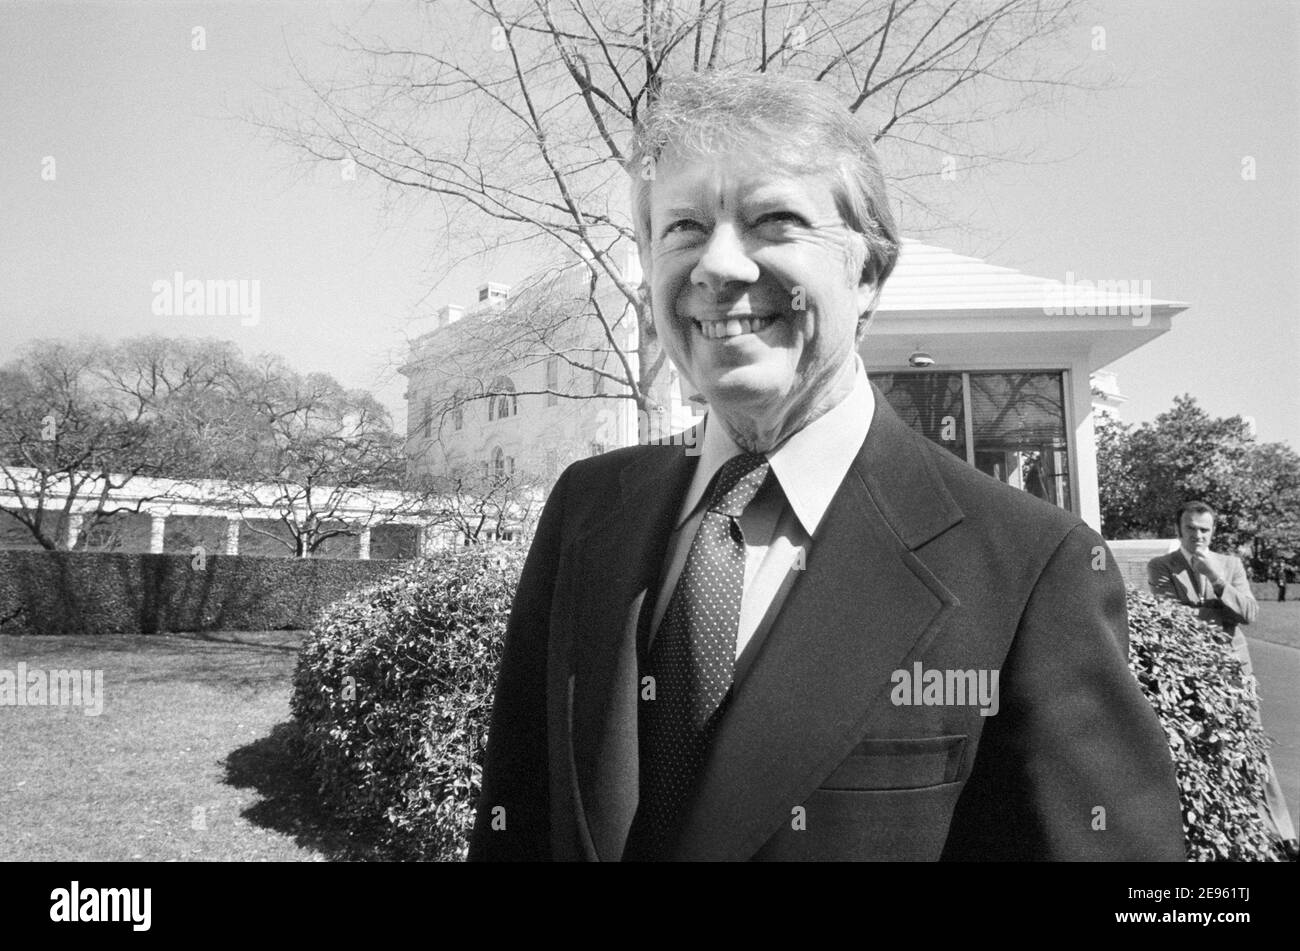 U.S. President Jimmy Carter, Half-Length Portrait at White House, Washington, D.C., USA, Marion S. Trikosko, March 8, 1977 Stock Photo